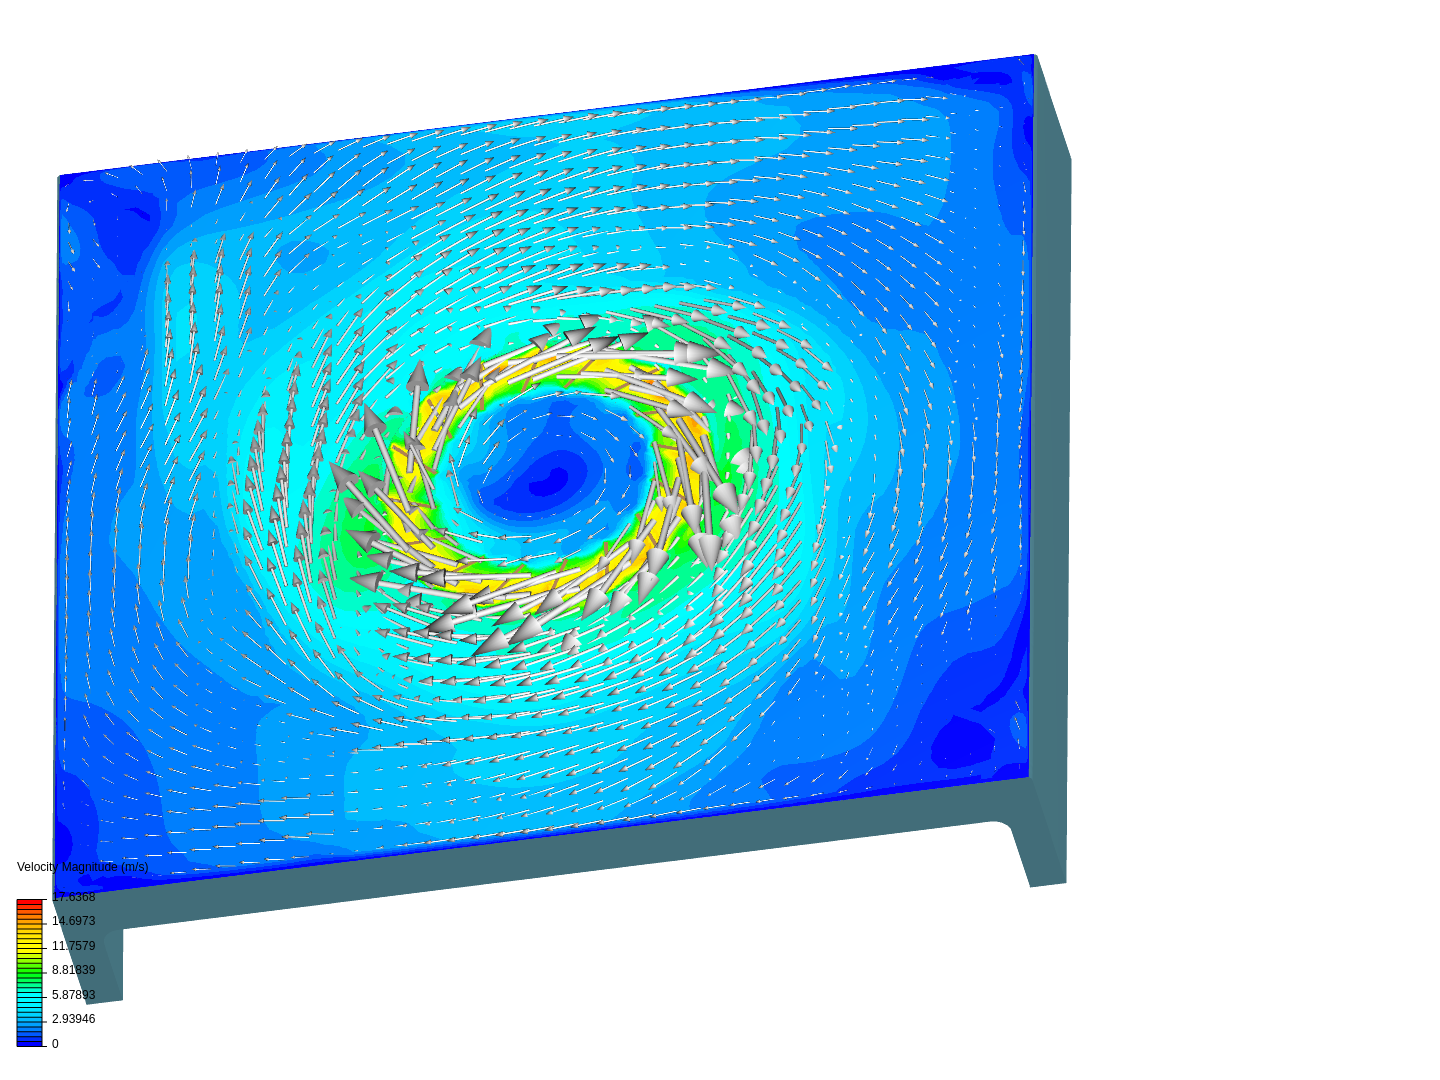 Radial mixer simulation image